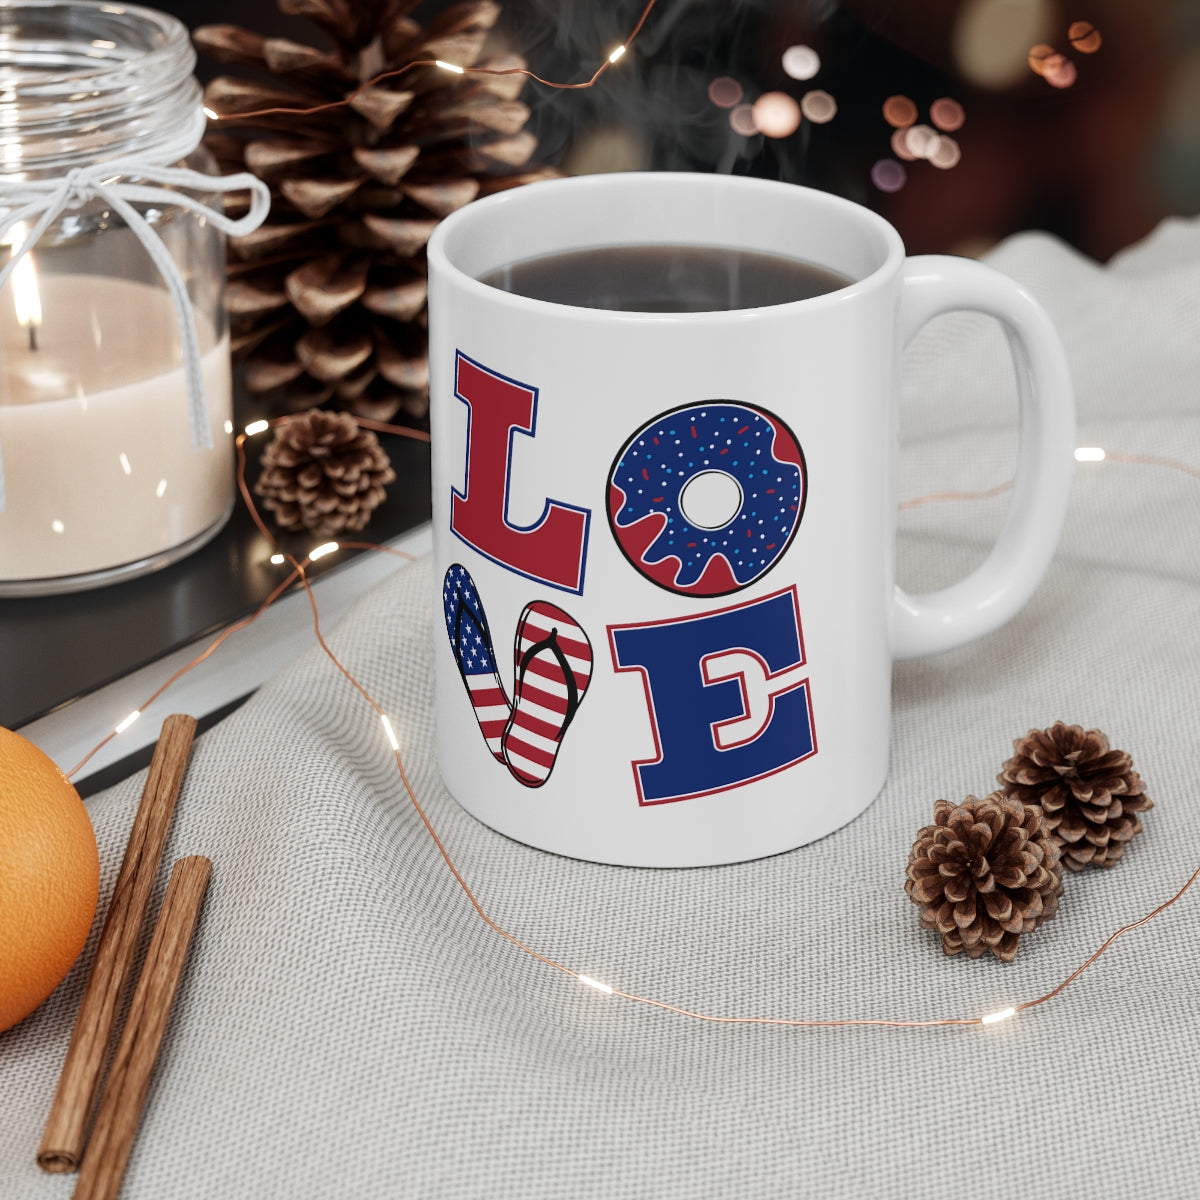 Personalized Coffee Mug Love America, Ceramic Mug 11oz, Gift for Daughters, Friends